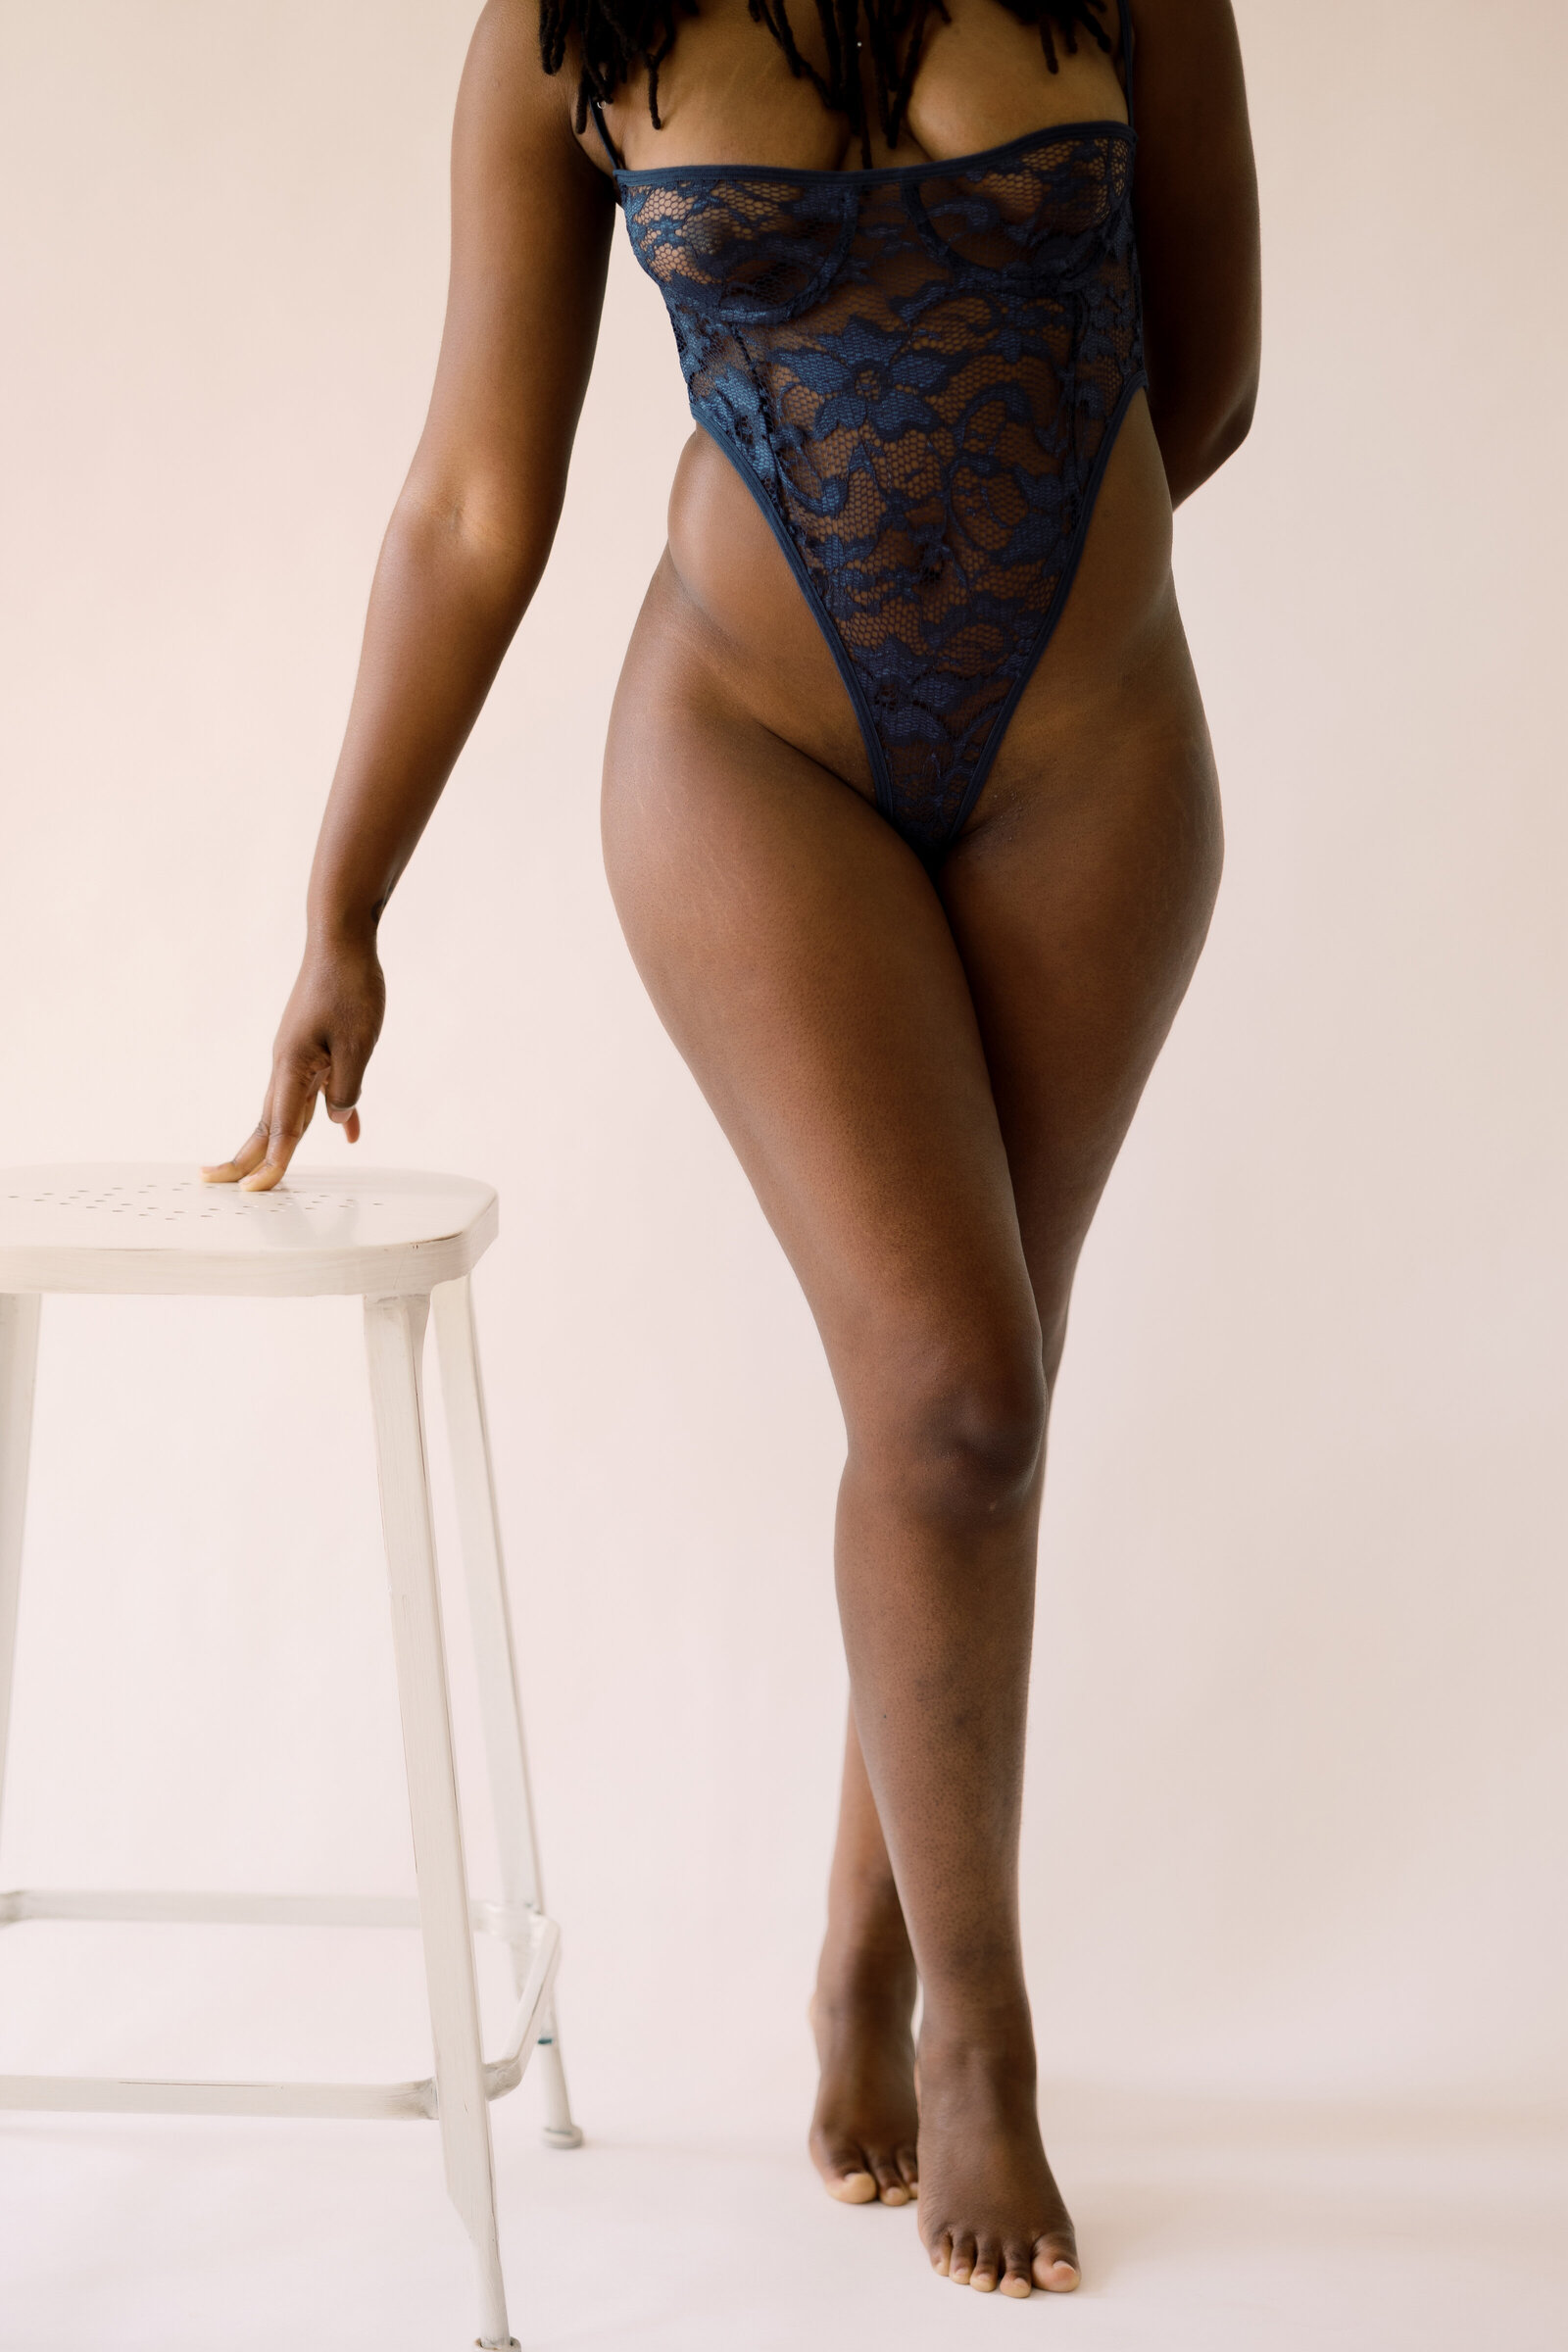 Black woman wearing lacy black lingerie